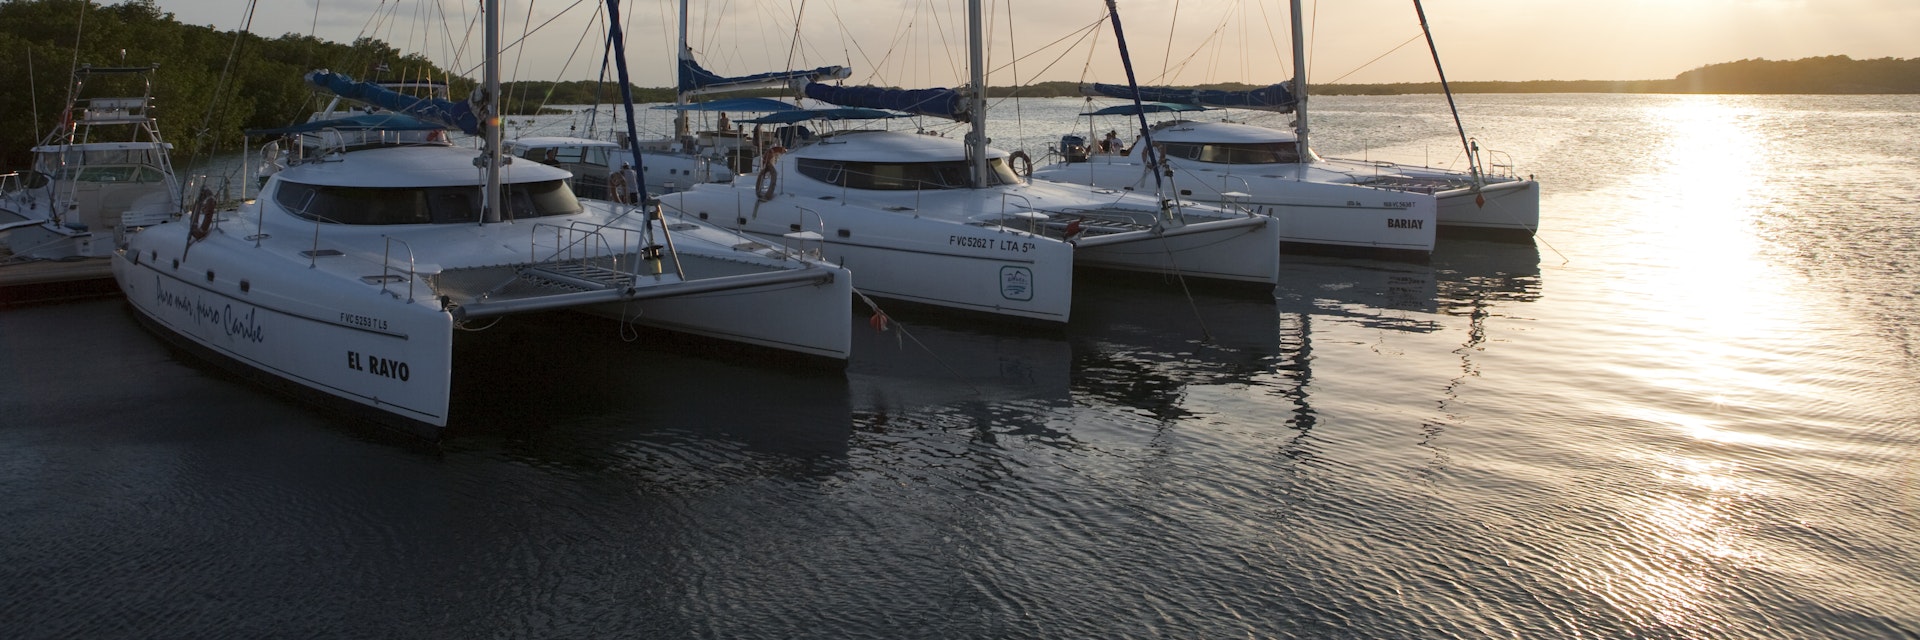 Catamarans at Marina Gaviota at sunset.